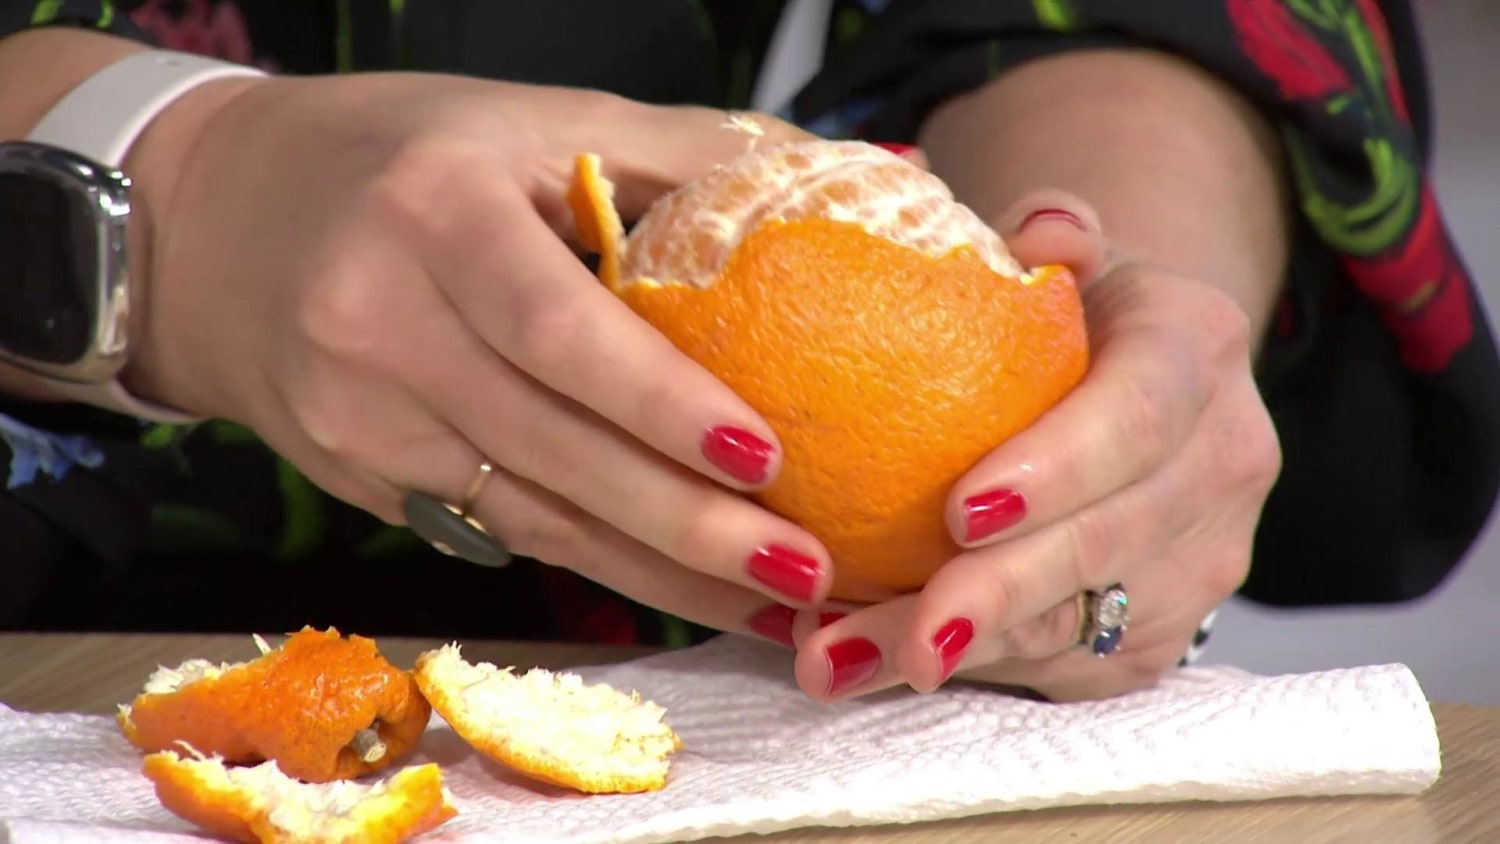 What Are Sumo Oranges? Meet the Tasty Citrus Fruit That's on TikTok